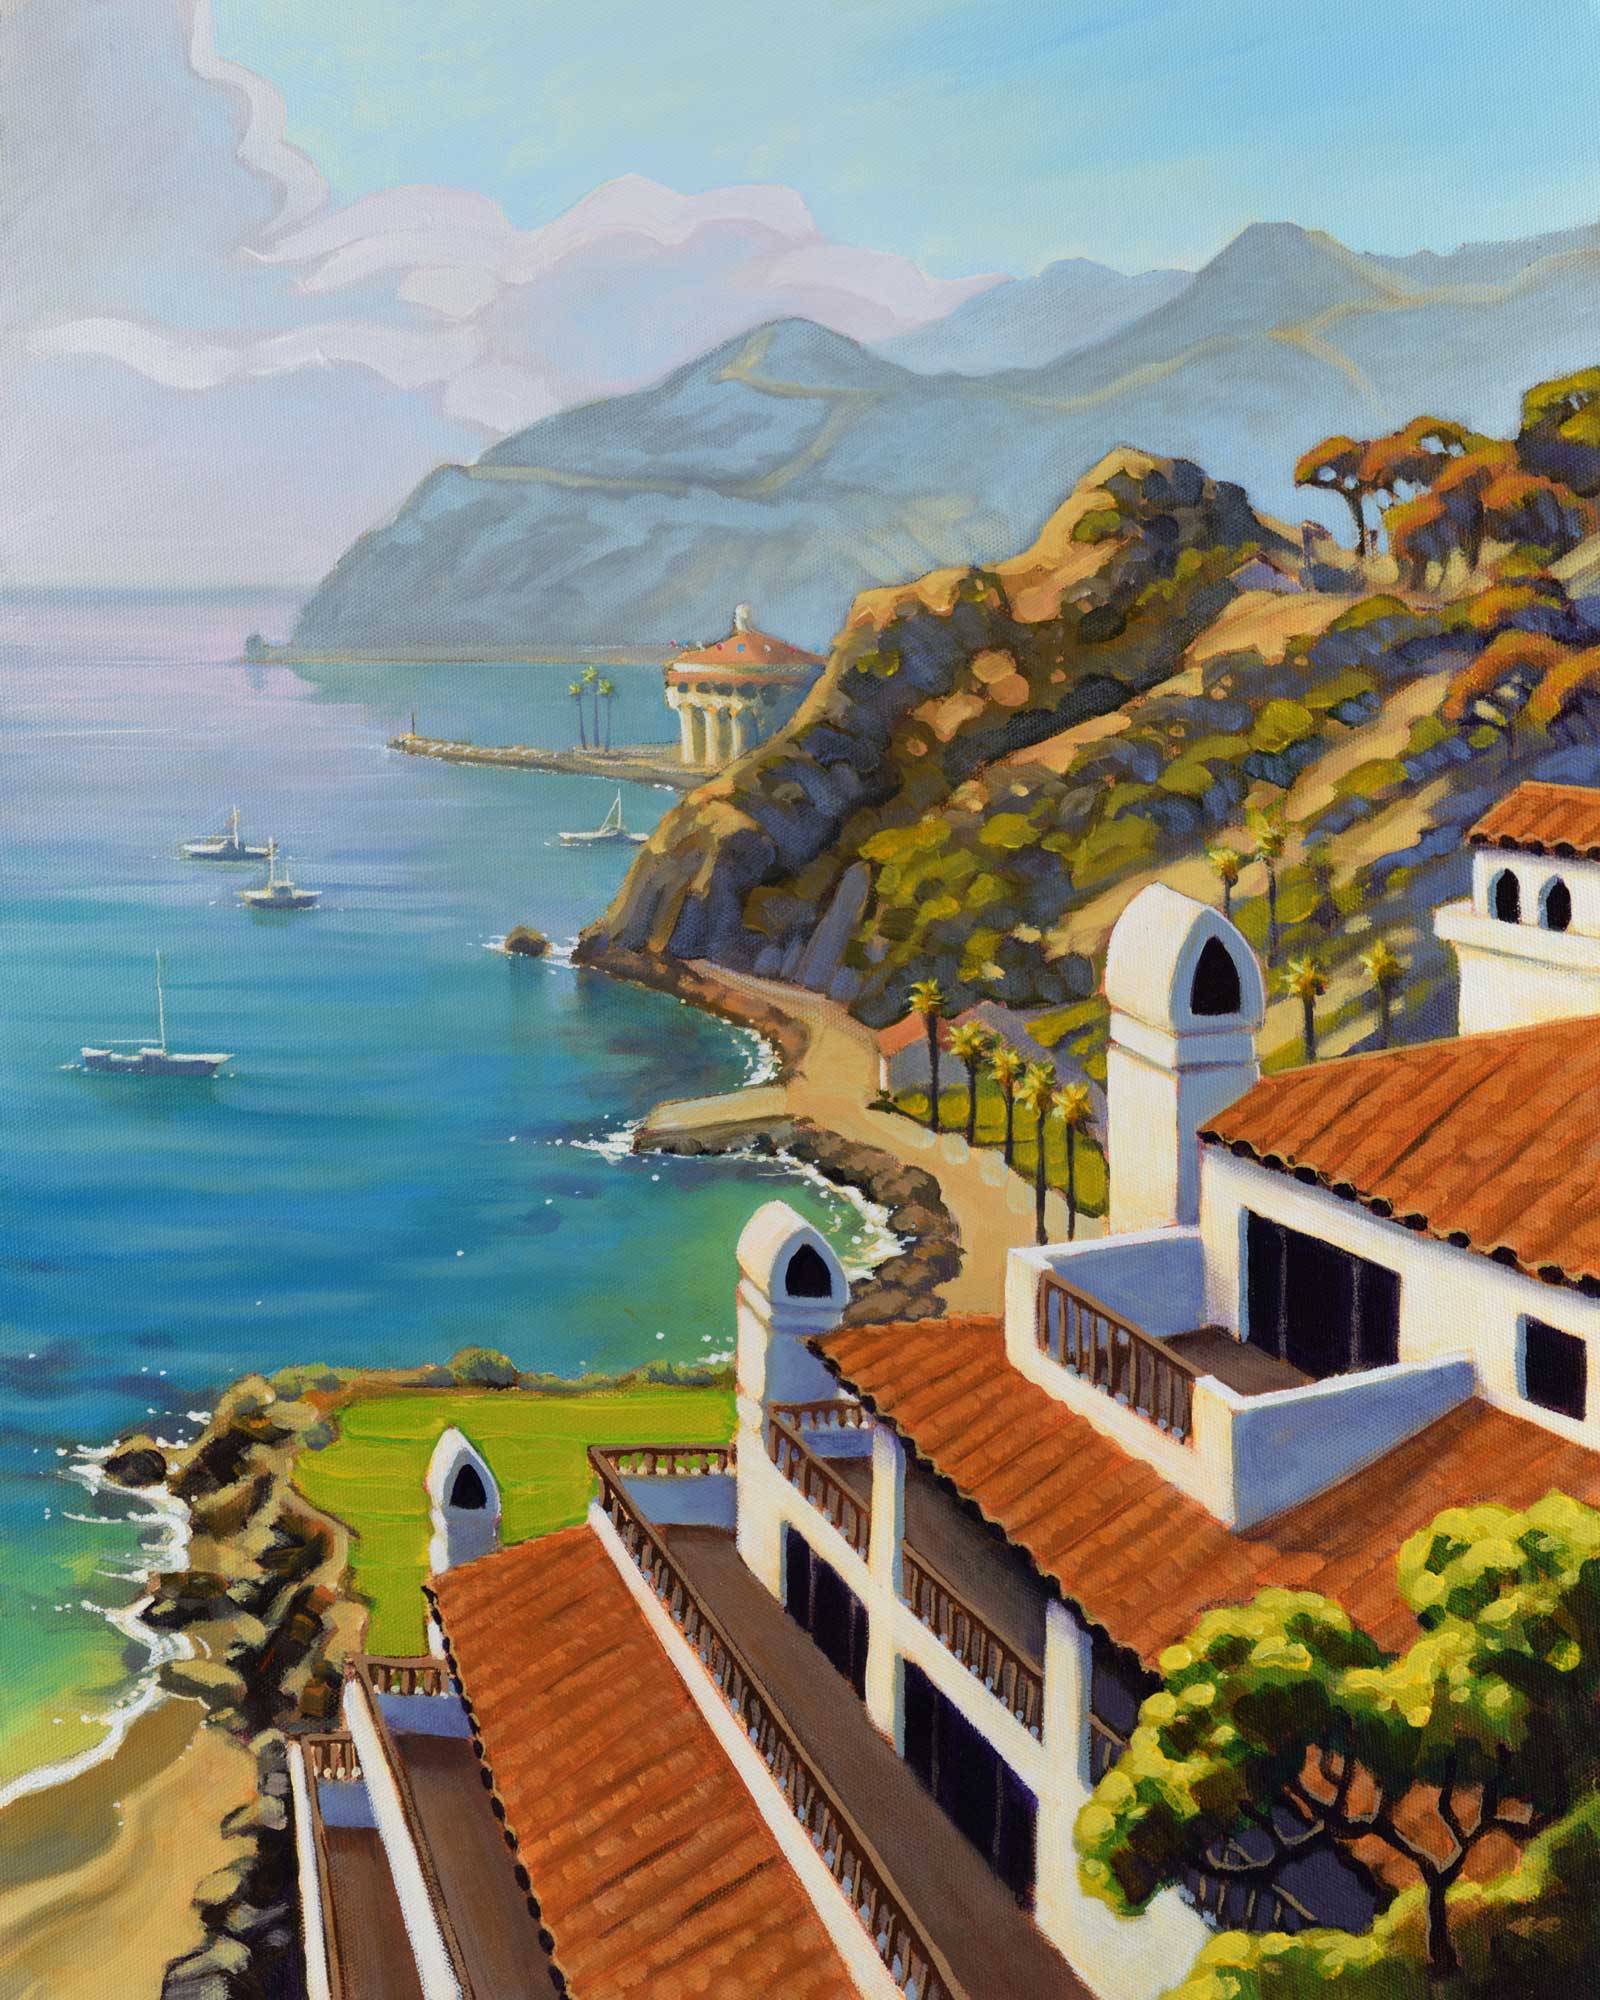 A plein air painting from Hamilton Cove looking toward Avalon Harbor on Catalina island off the coast of southern California